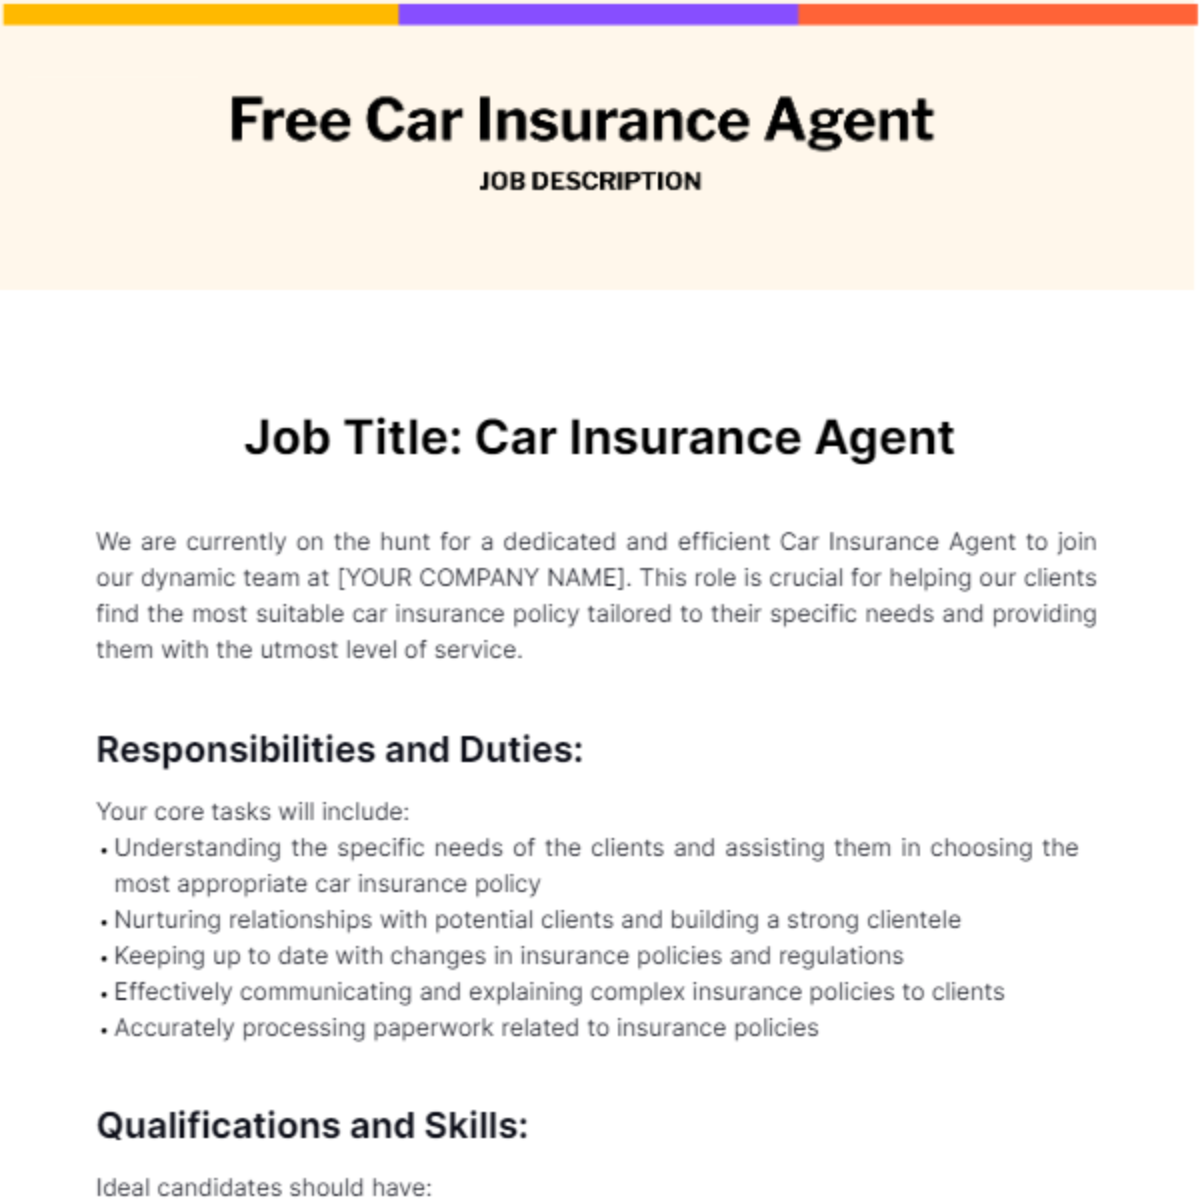 Free Car Insurance Agent Job Description Template